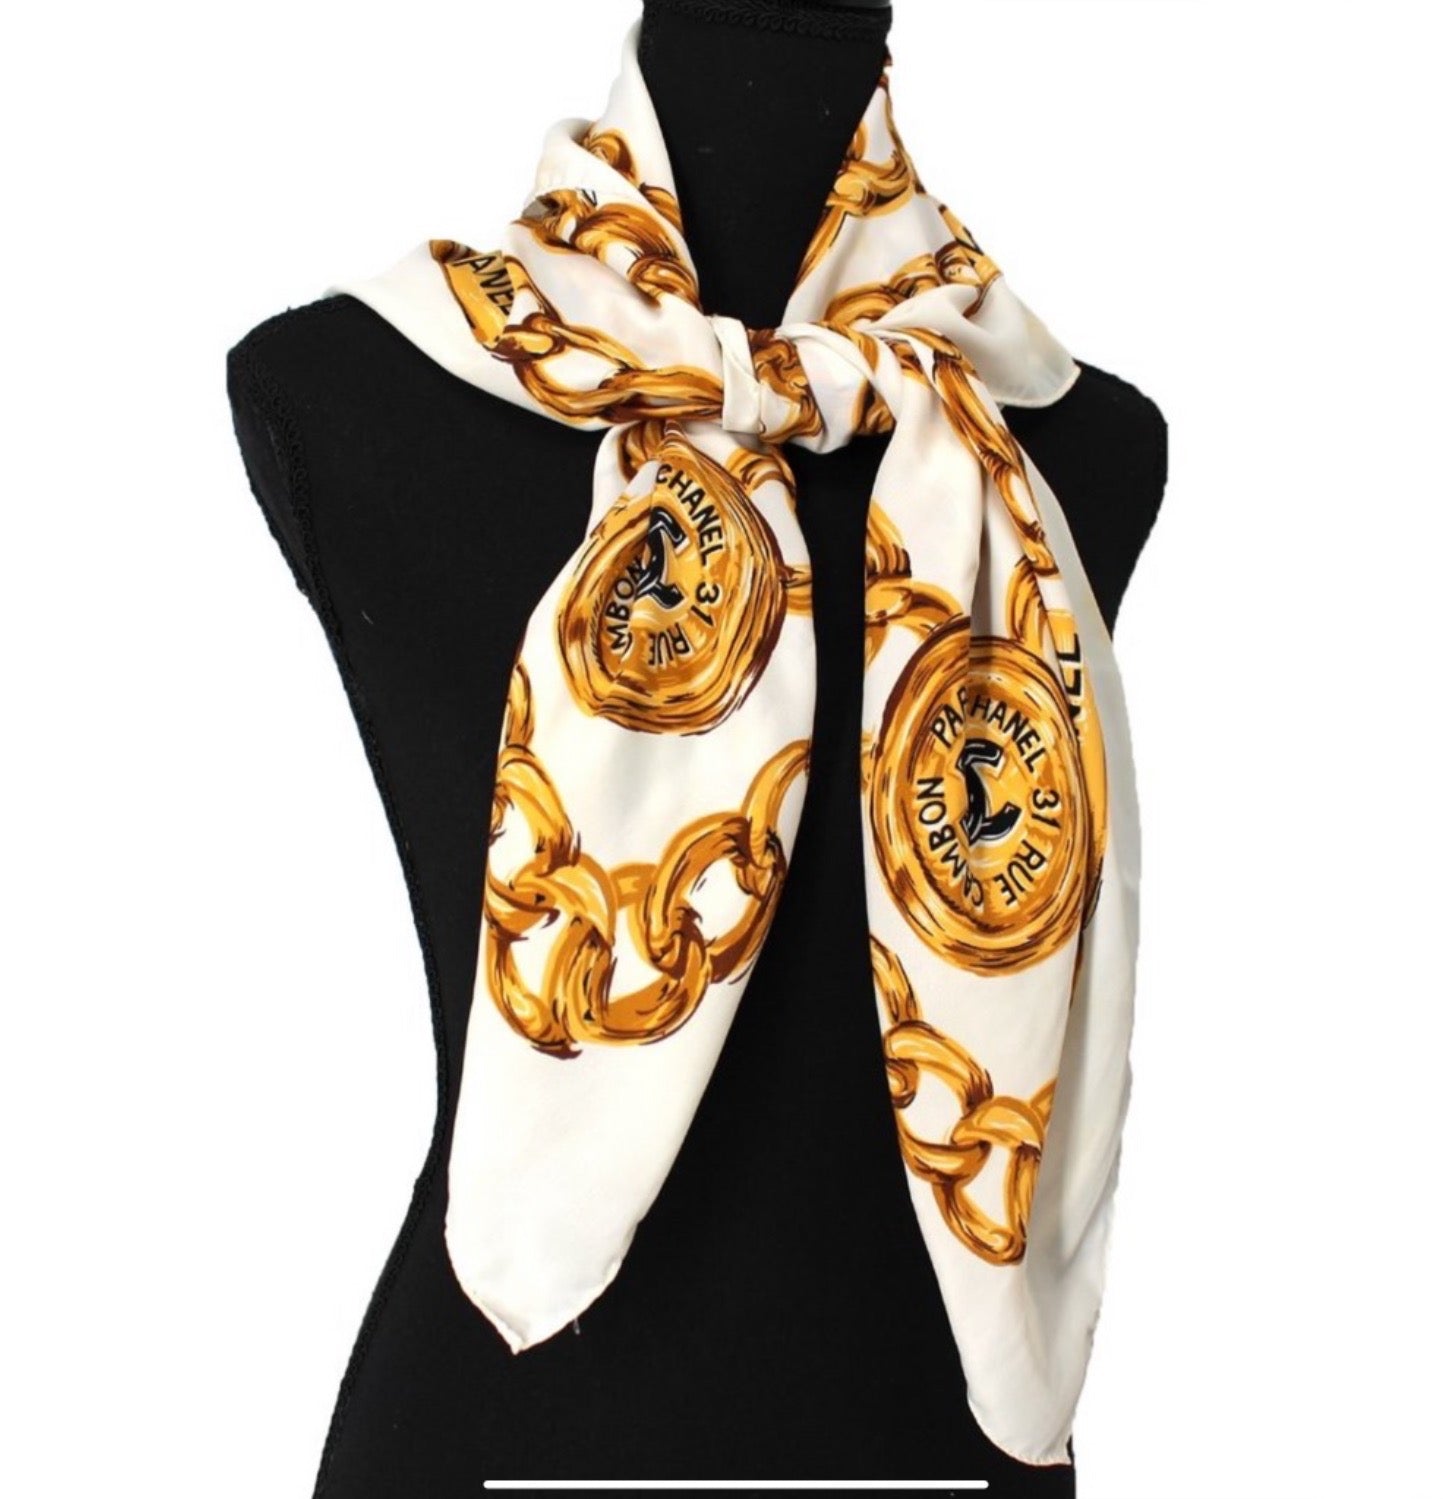 Chanel Vintage - Floral Print Silk Scarf - White Ivory - Silk Foulard -  Luxury High Quality - Avvenice